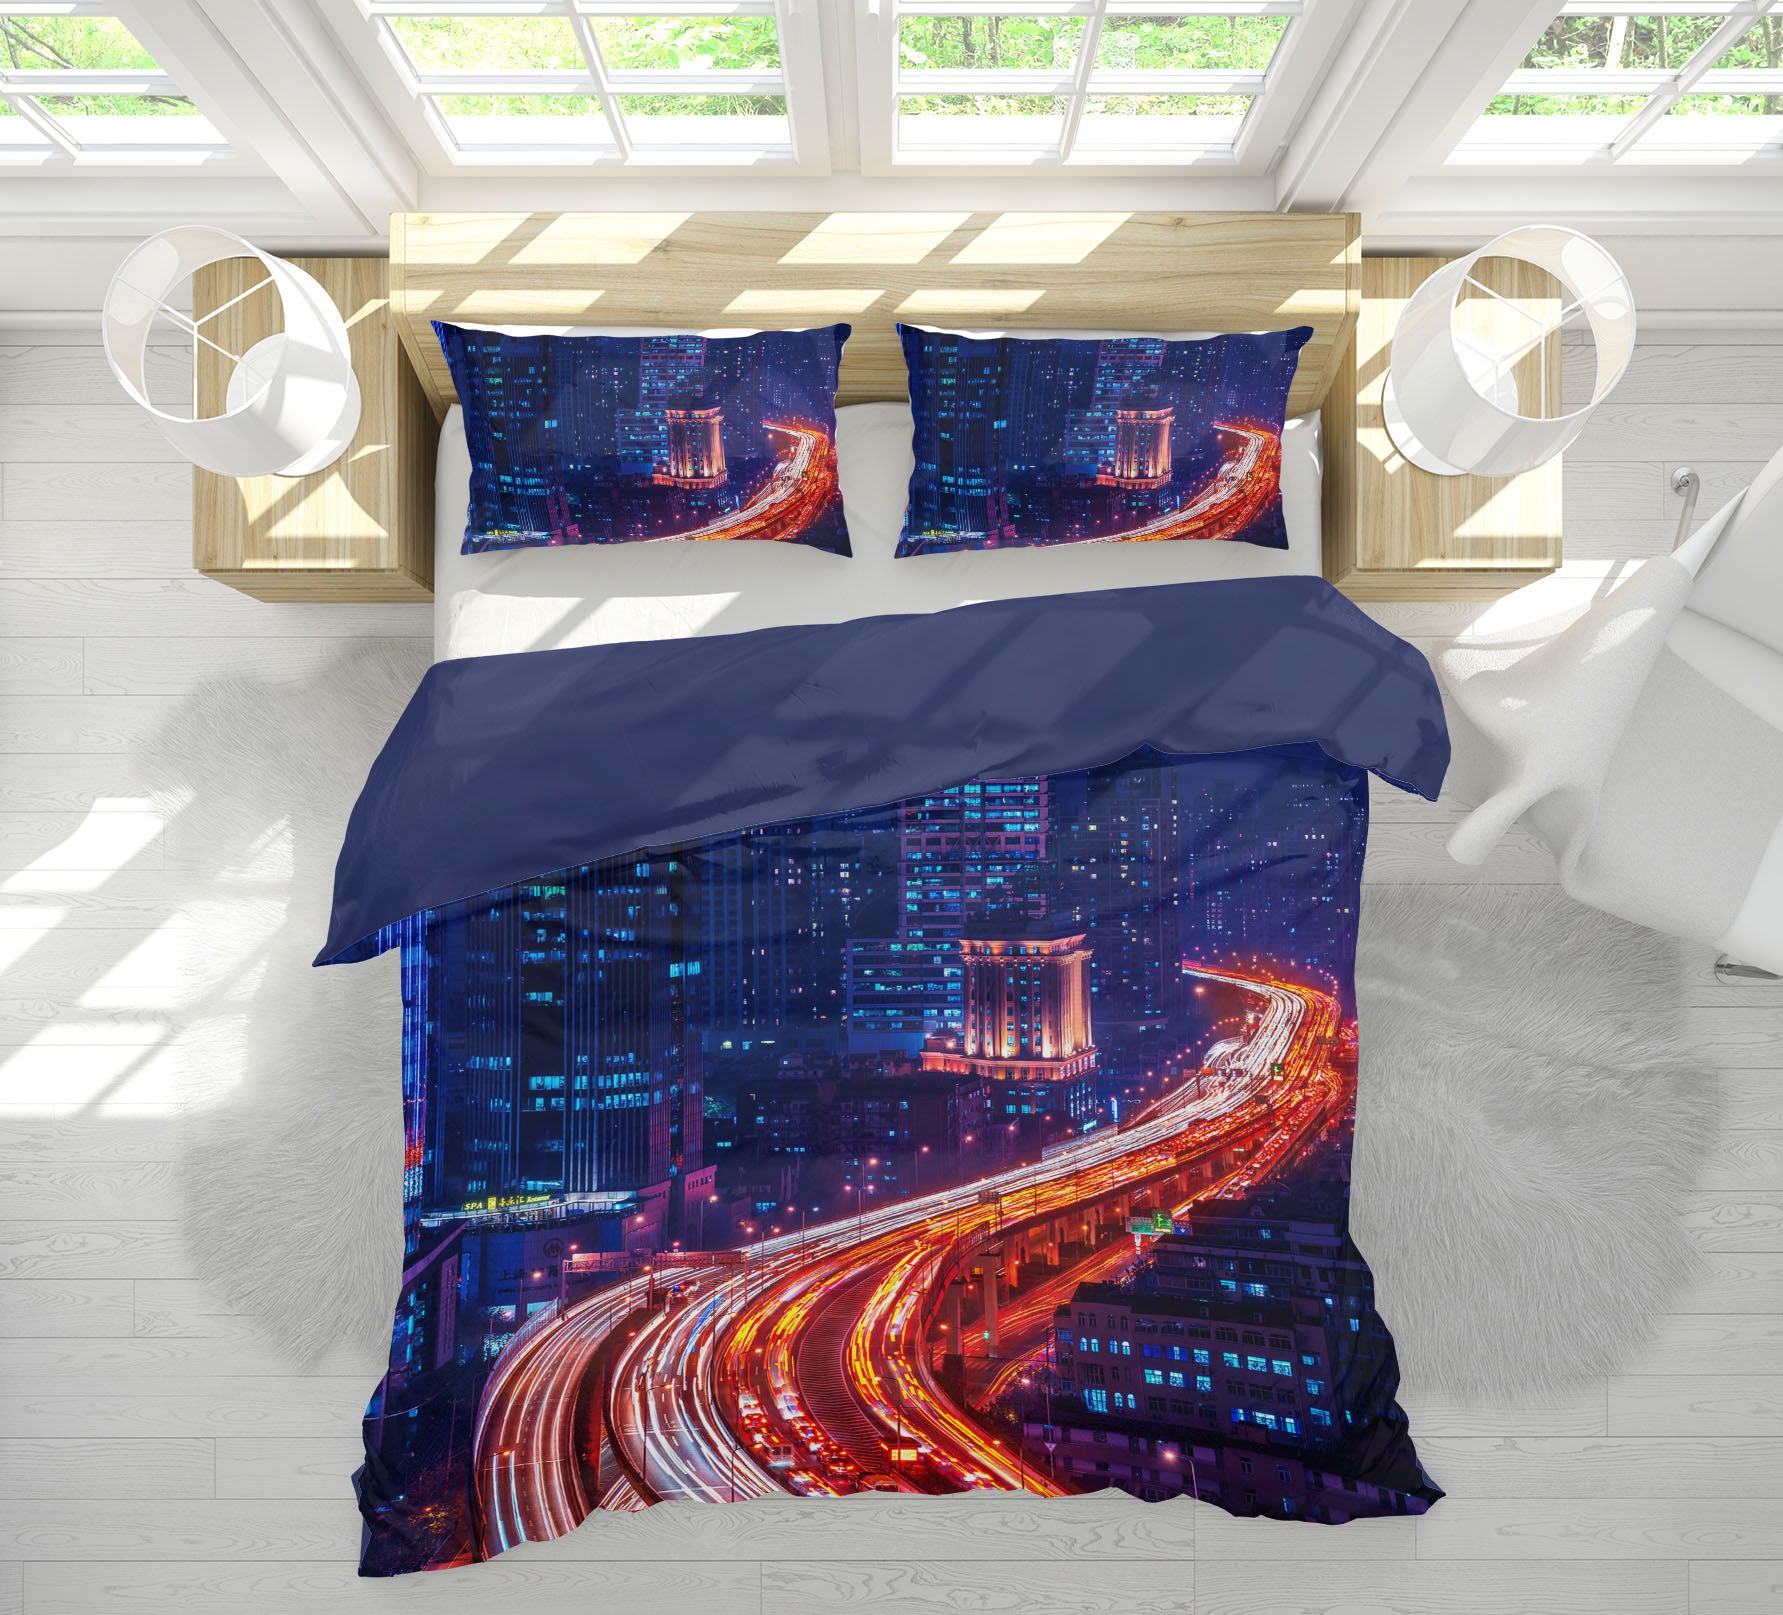 3D Traffic Jam 2121 Marco Carmassi Bedding Bed Pillowcases Quilt